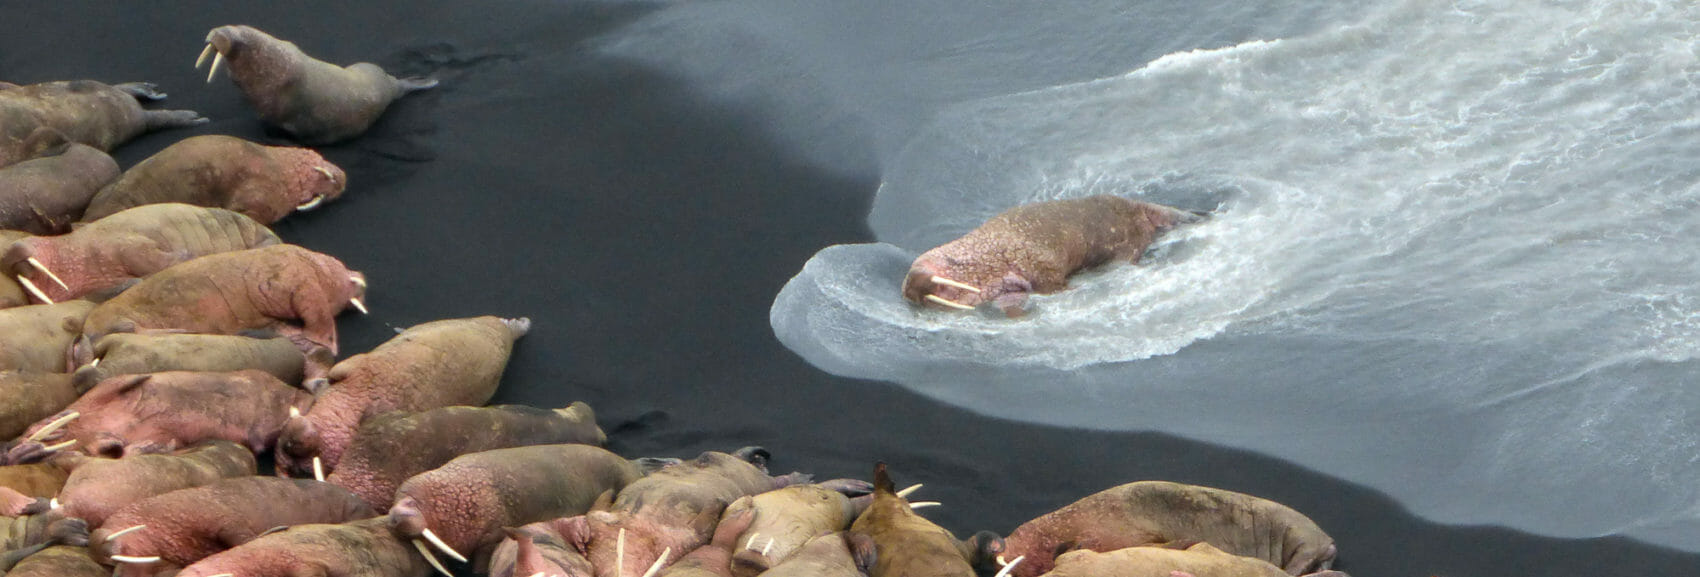 walrus rest in the waves of the bering sea in Alaska